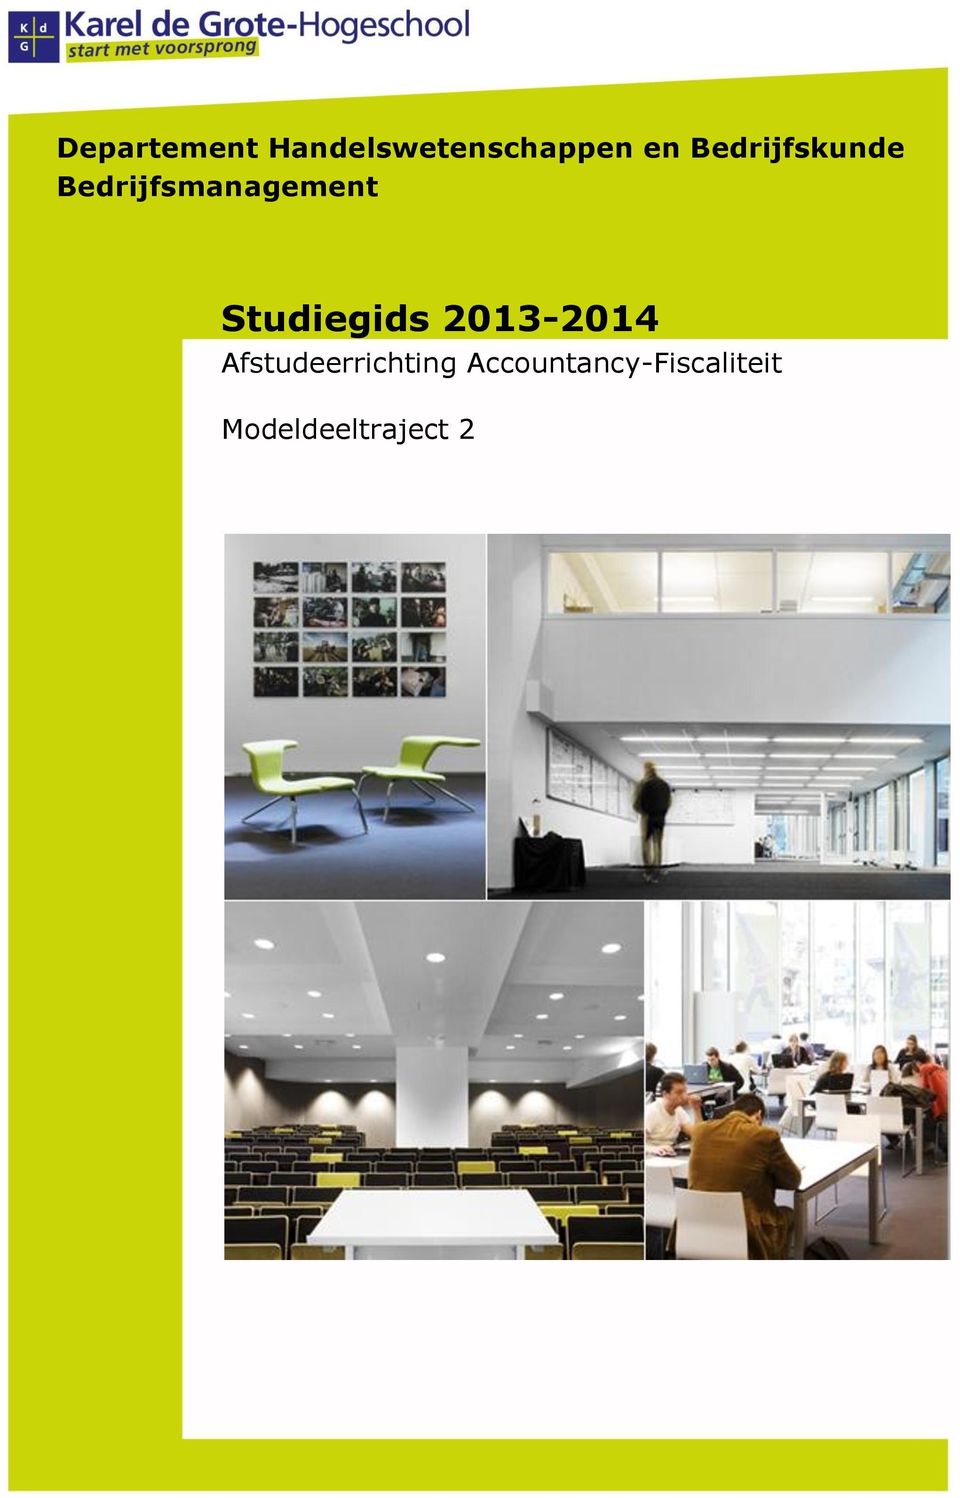 Studiegids 2013-2014